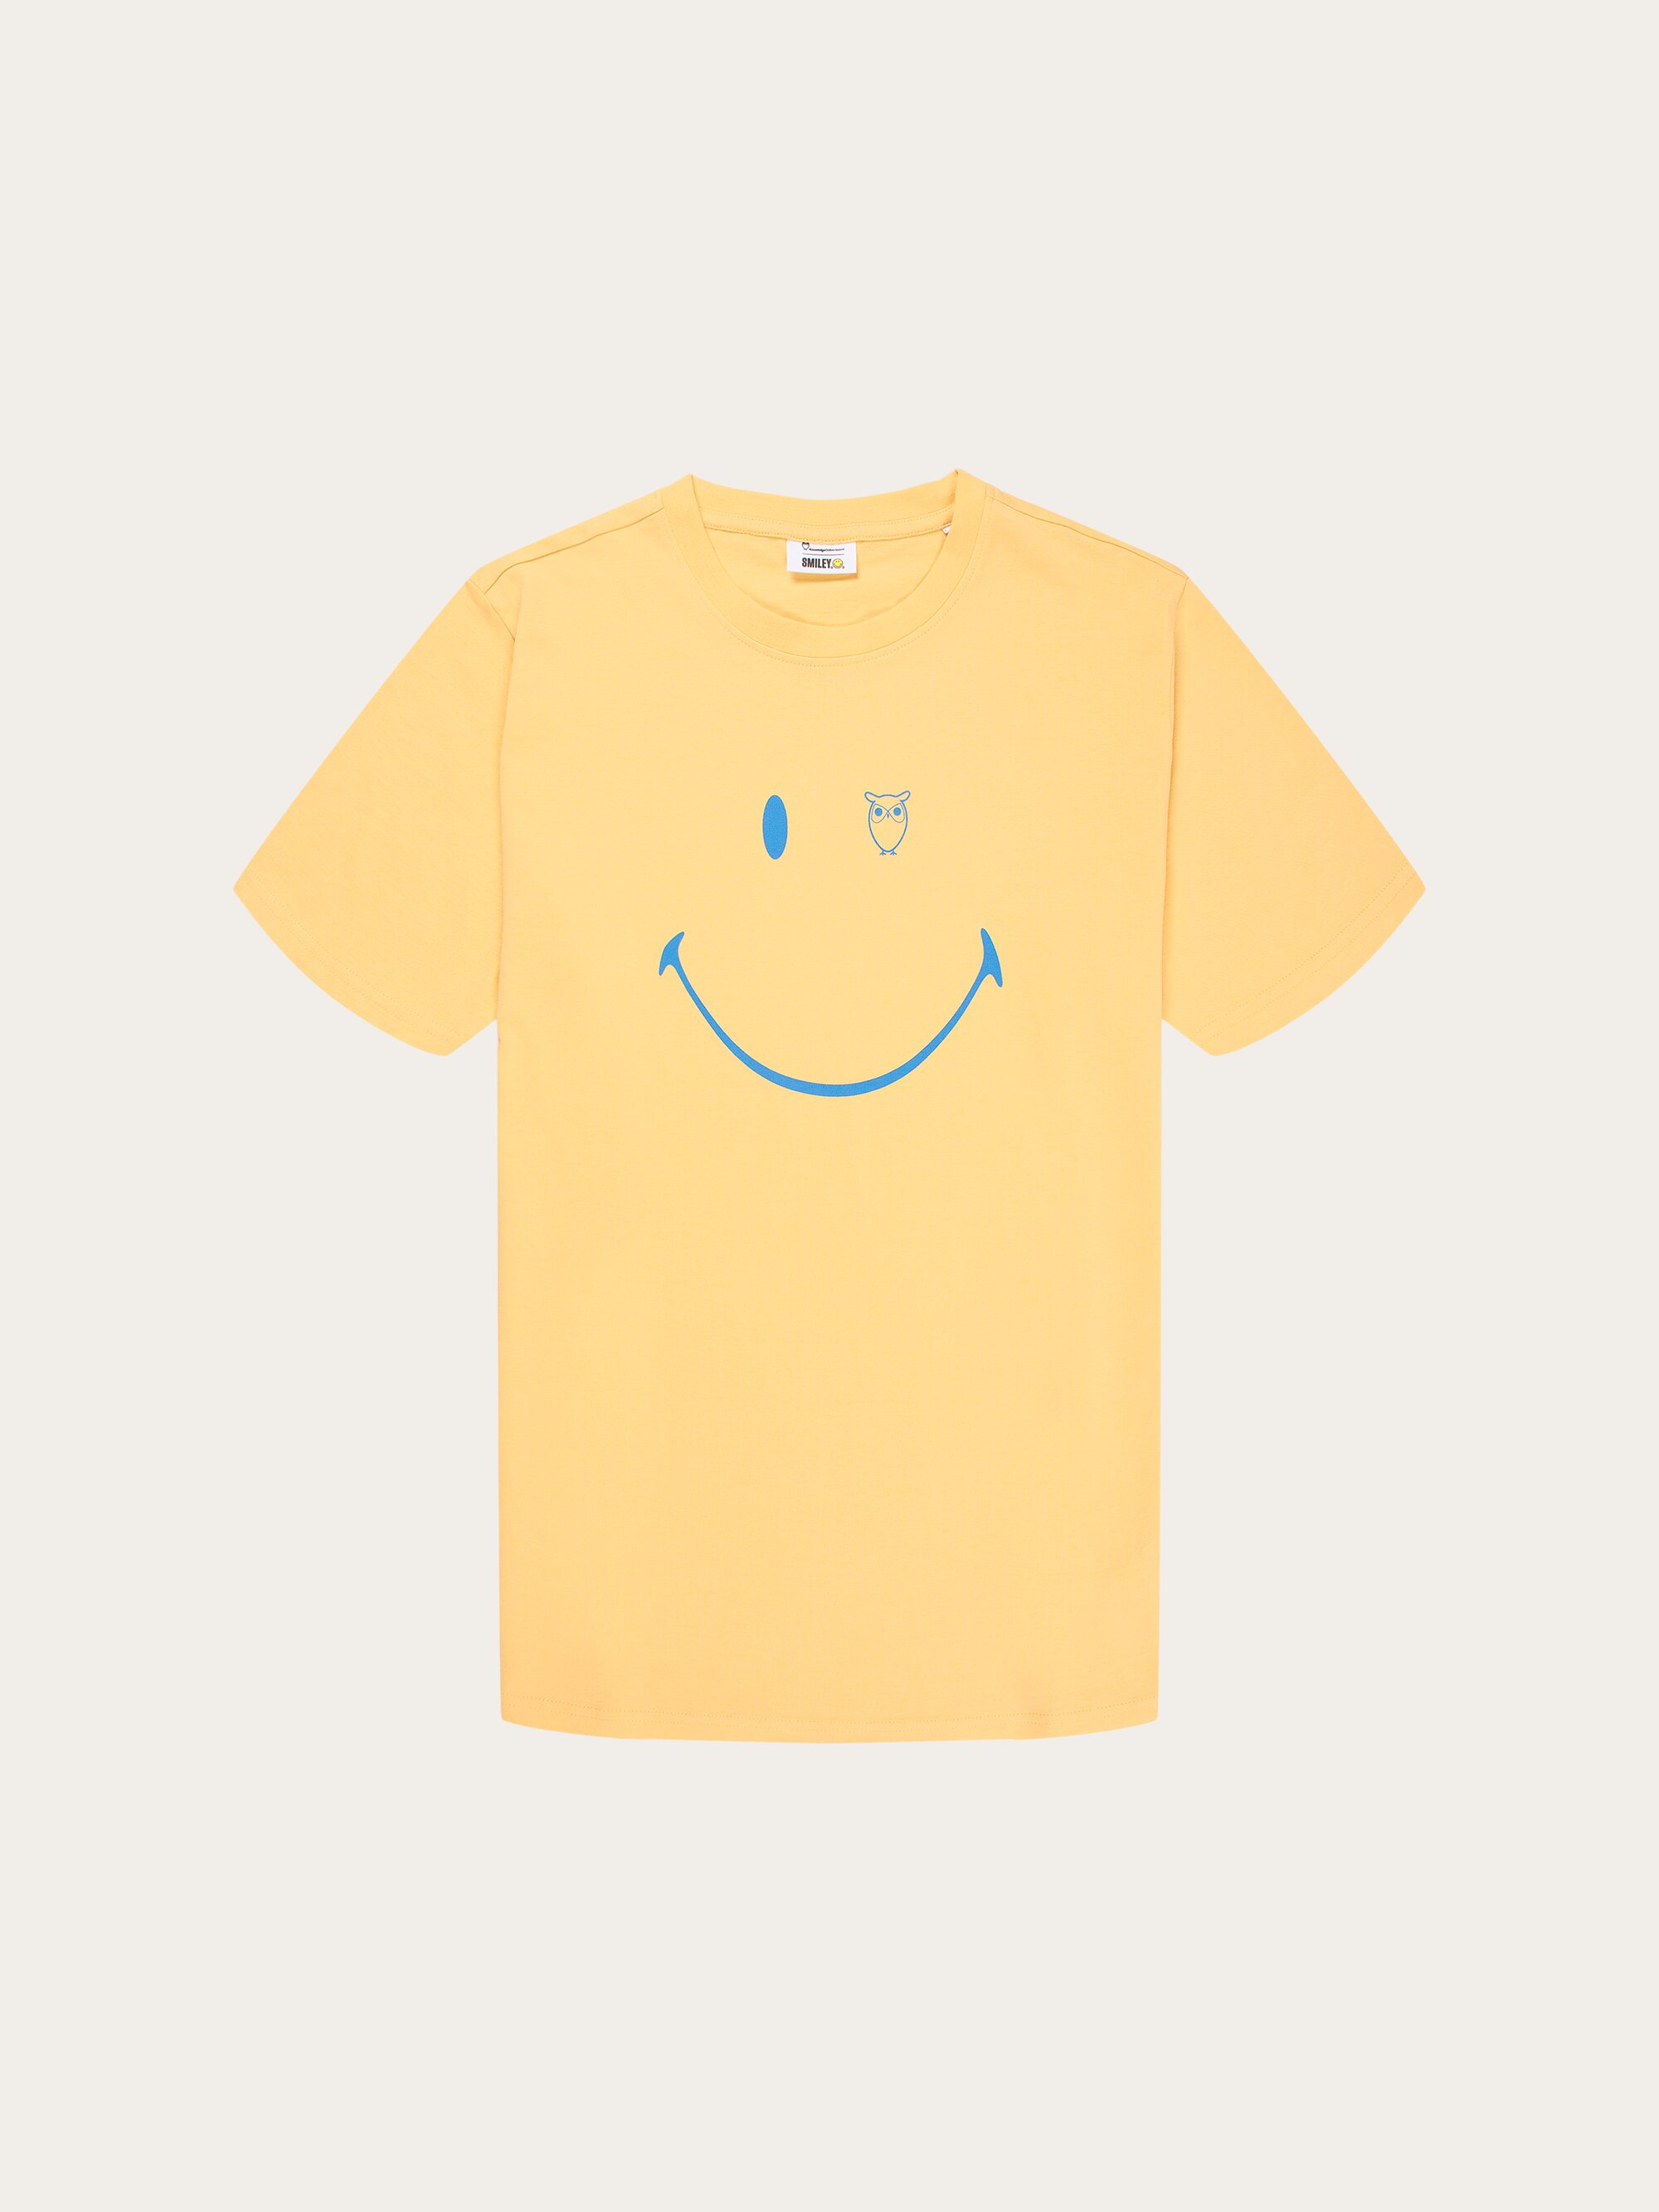 Smiley T-shirt